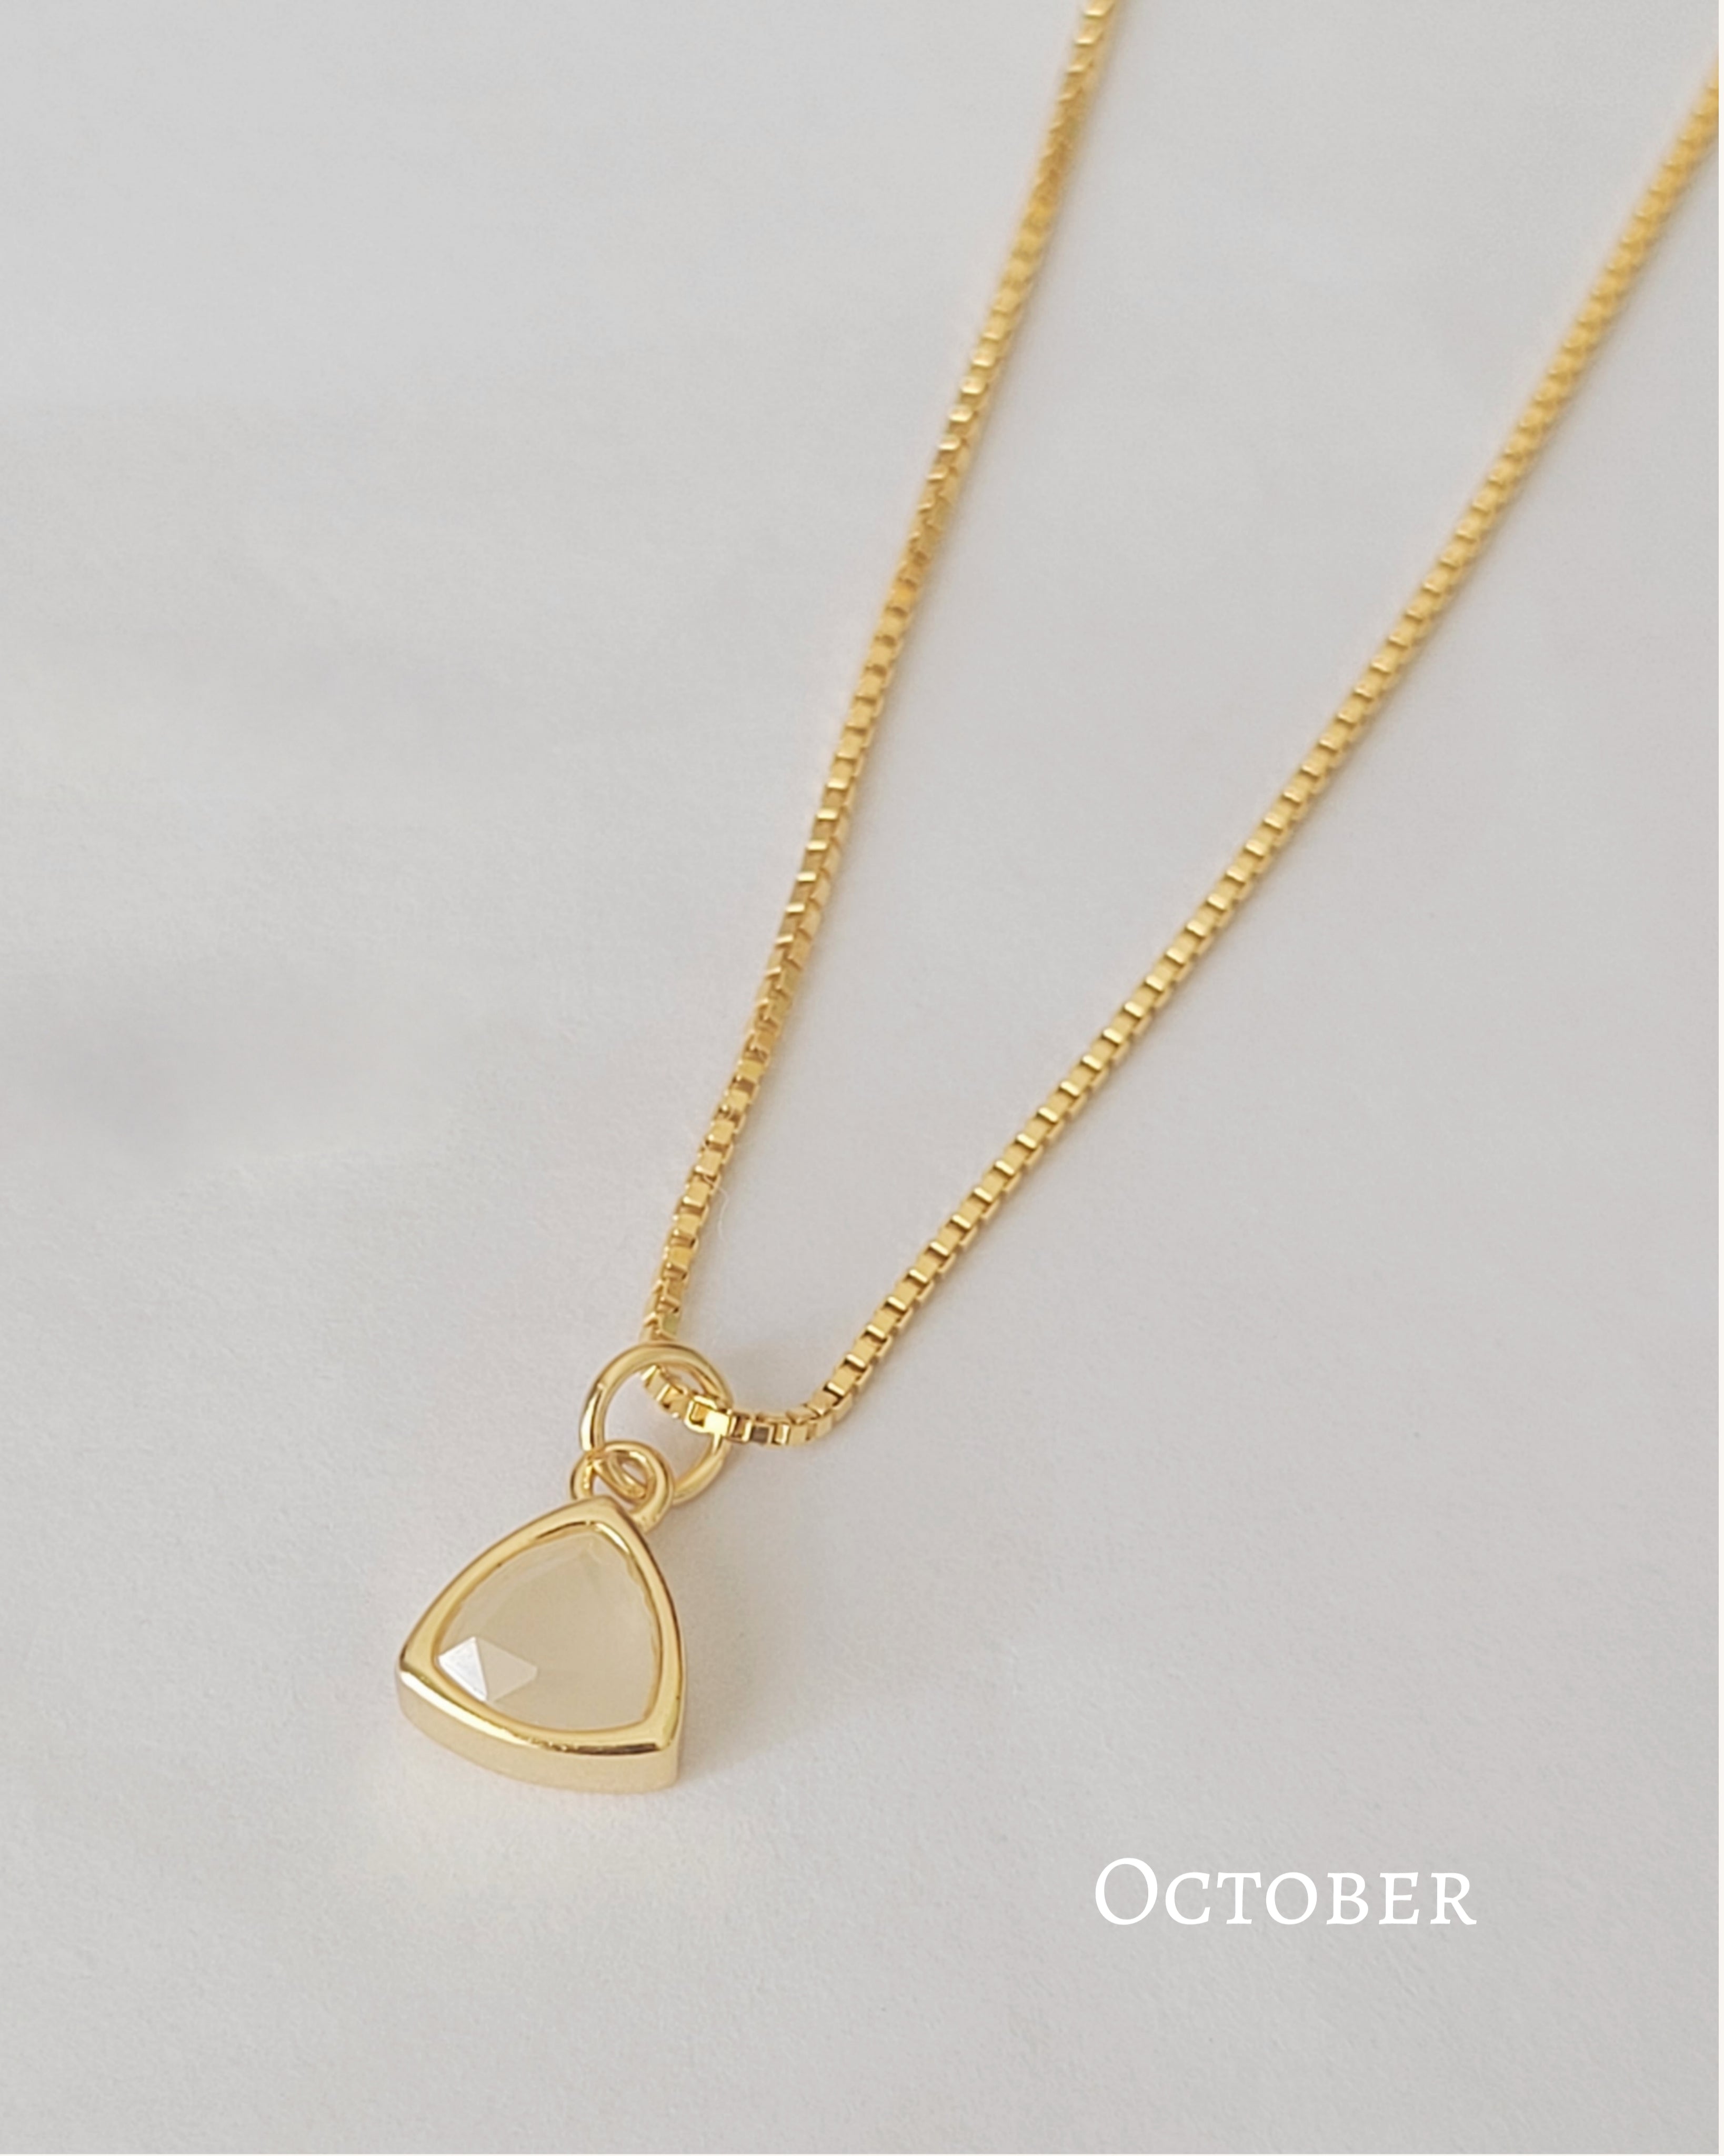 October birthstone necklace 